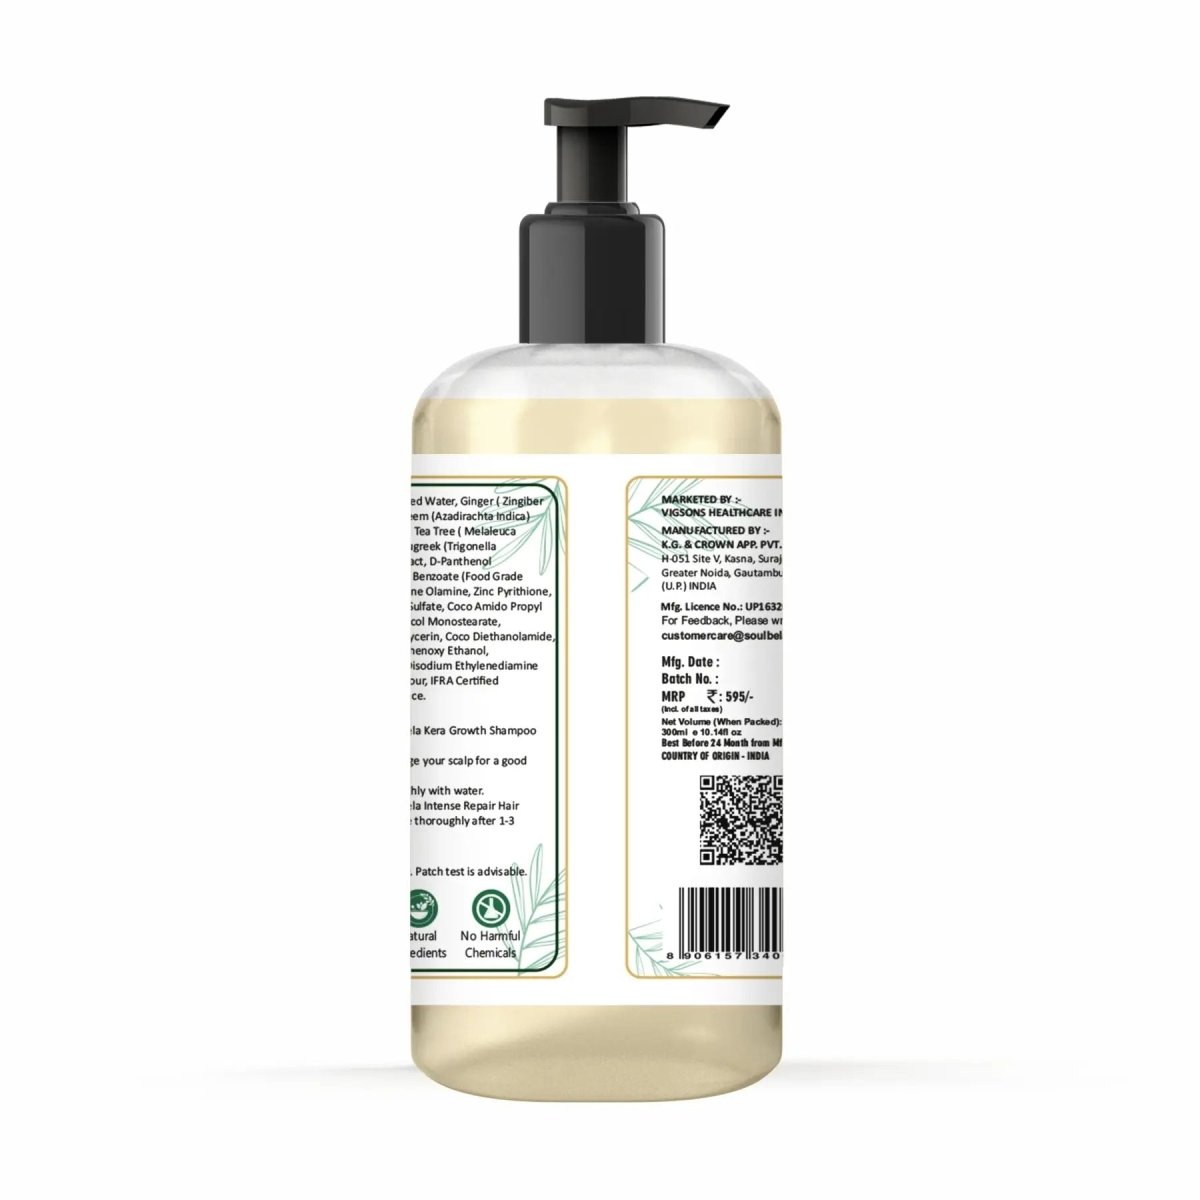 
                  
                    Soul Bela Tea Tree & Ginger Anti-Dandruff Shampoo (300ml) - Kreate- Shampoos
                  
                